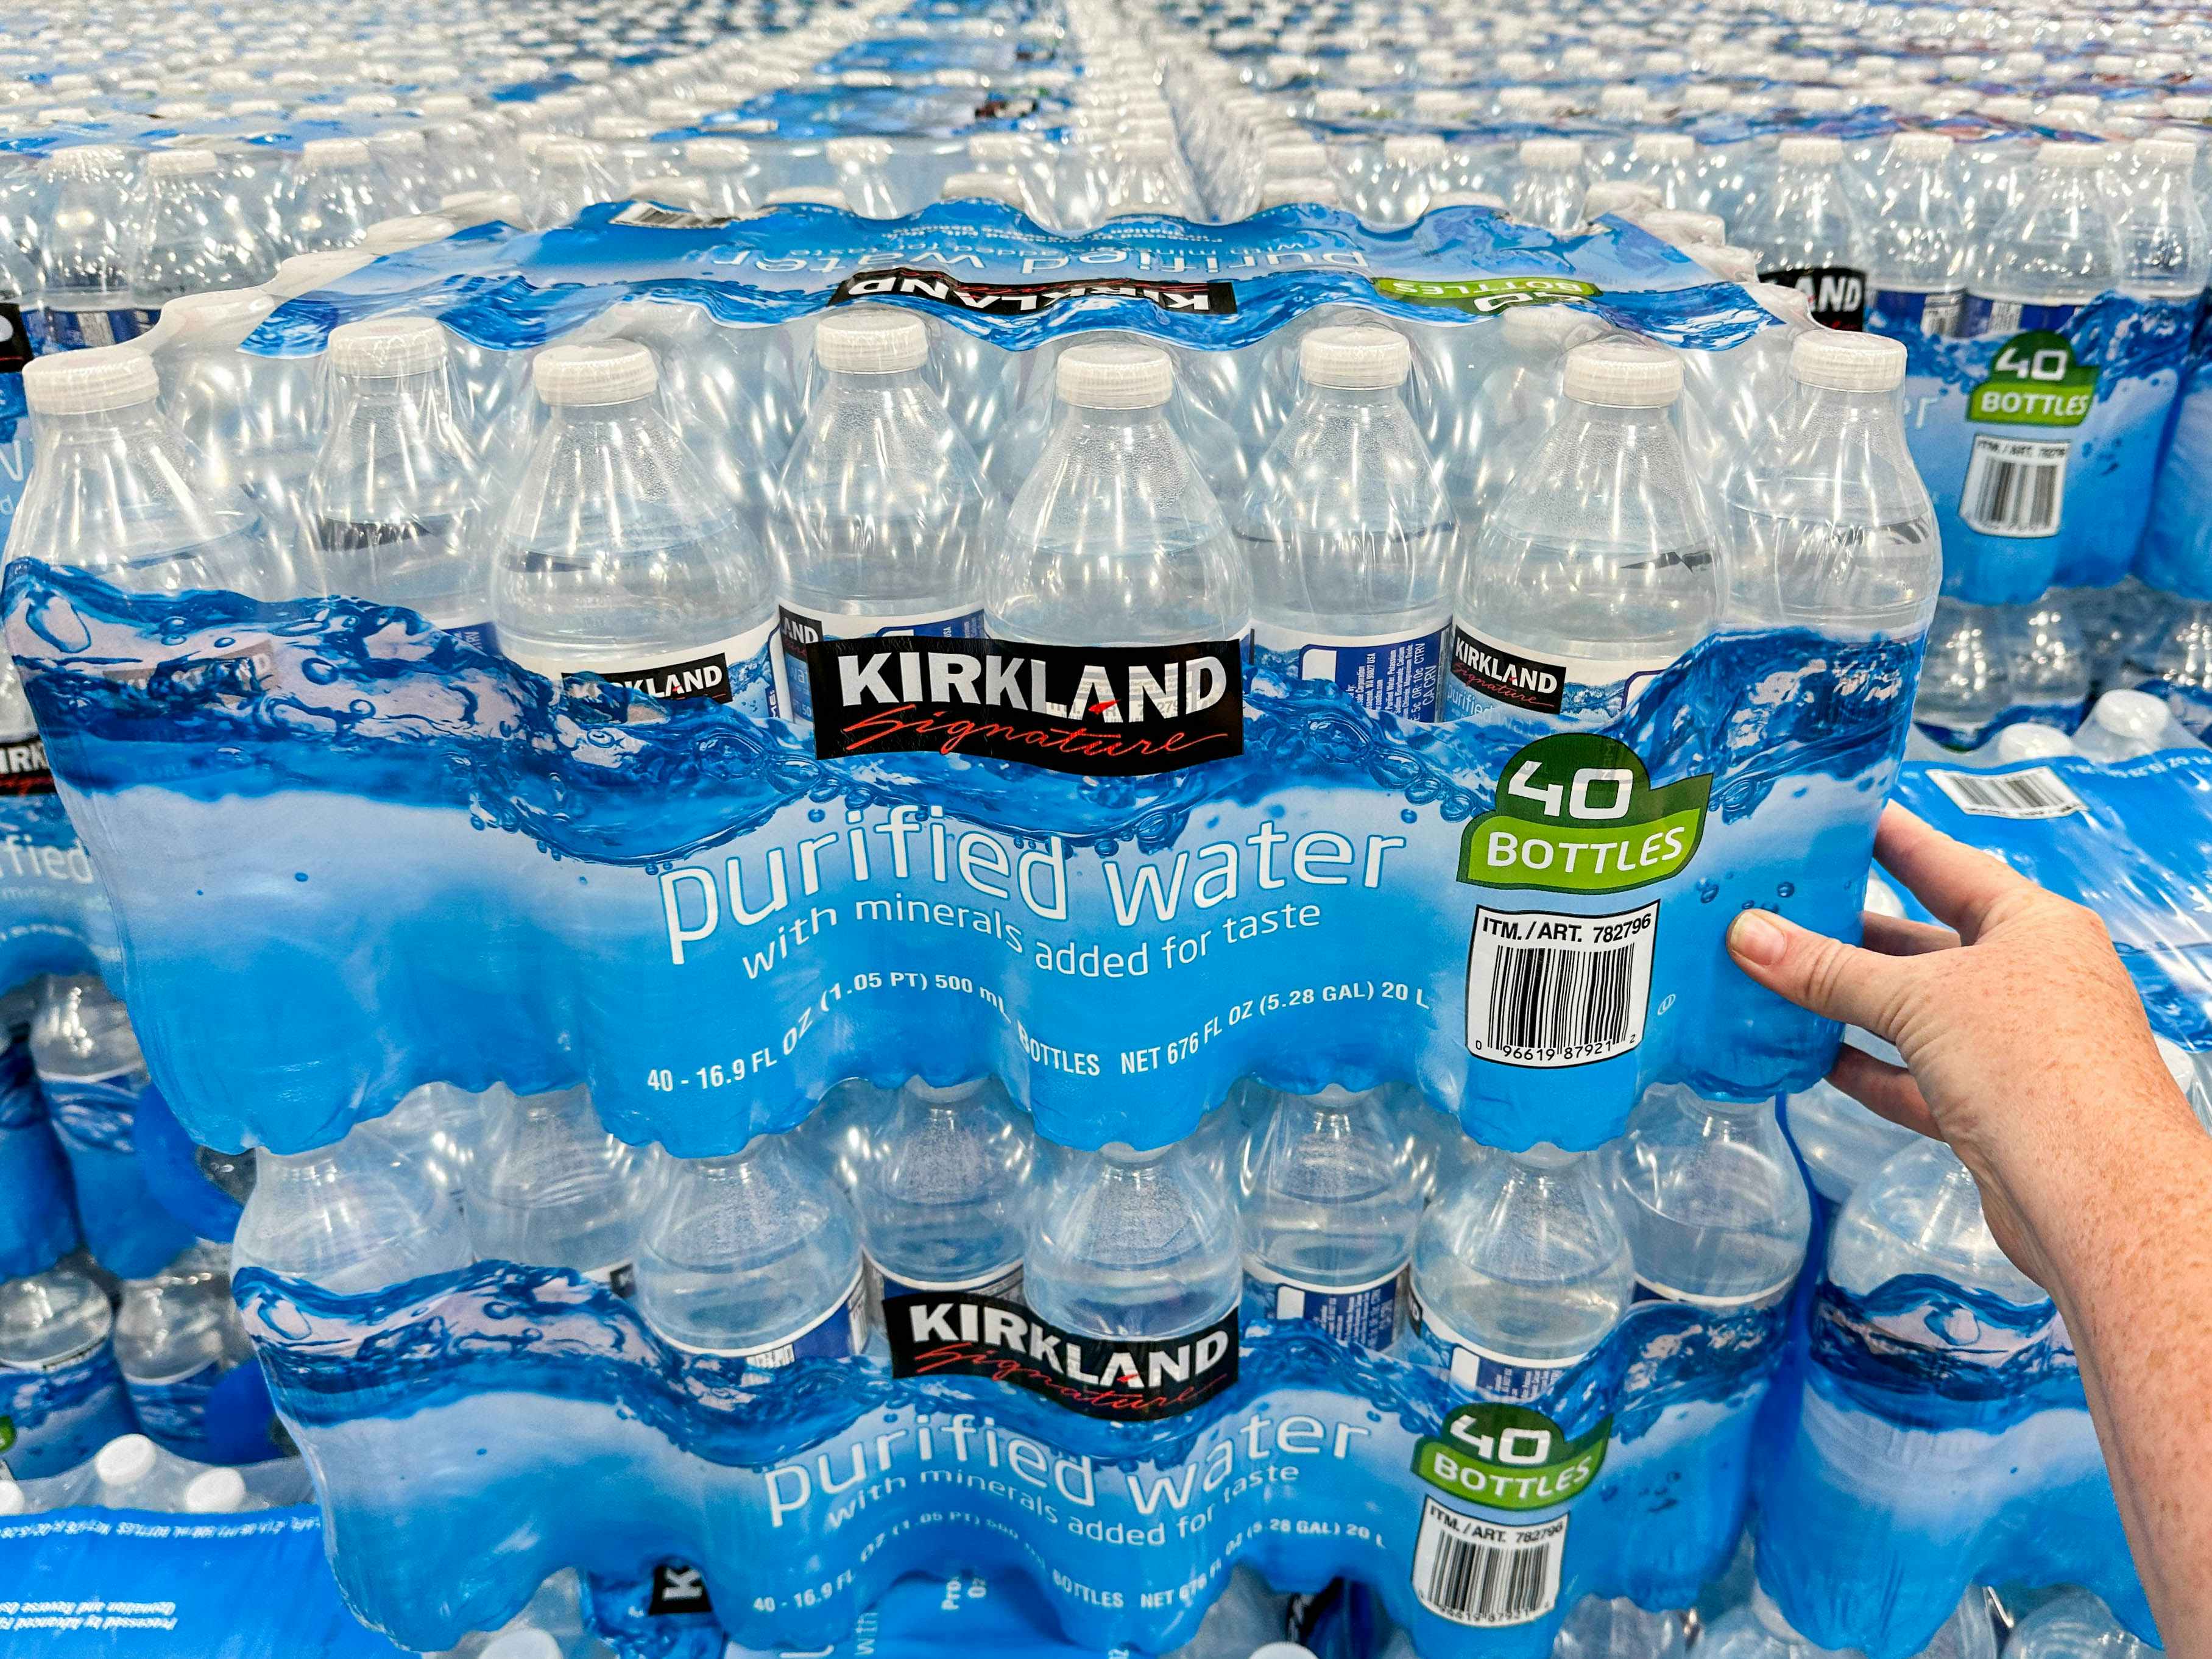 Meijer Purified Drinking Water Bottles 40 Pack, 16.9 oz